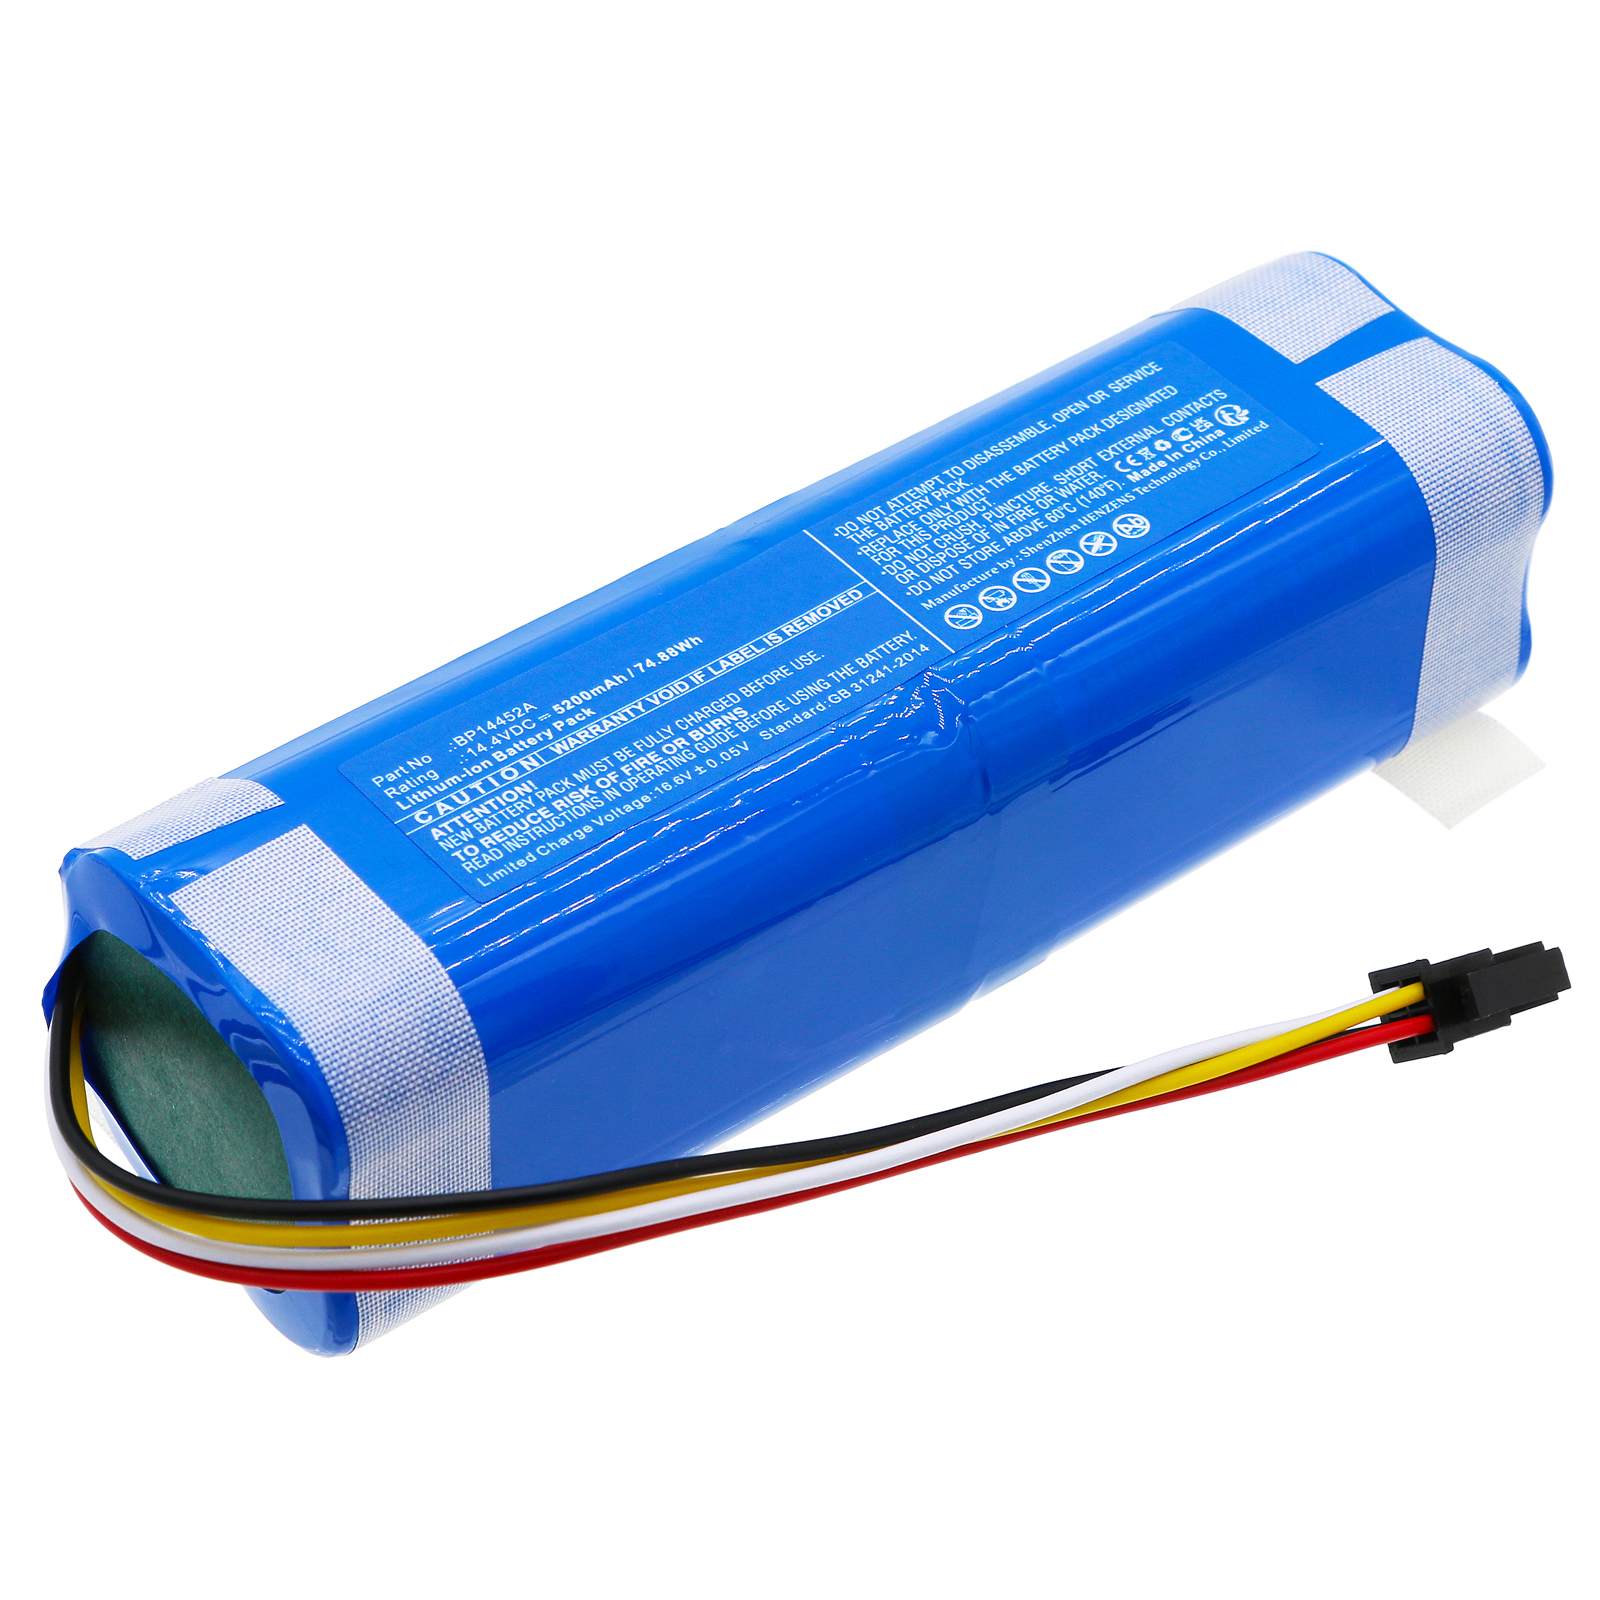 Batteries for MideaVacuum Cleaner